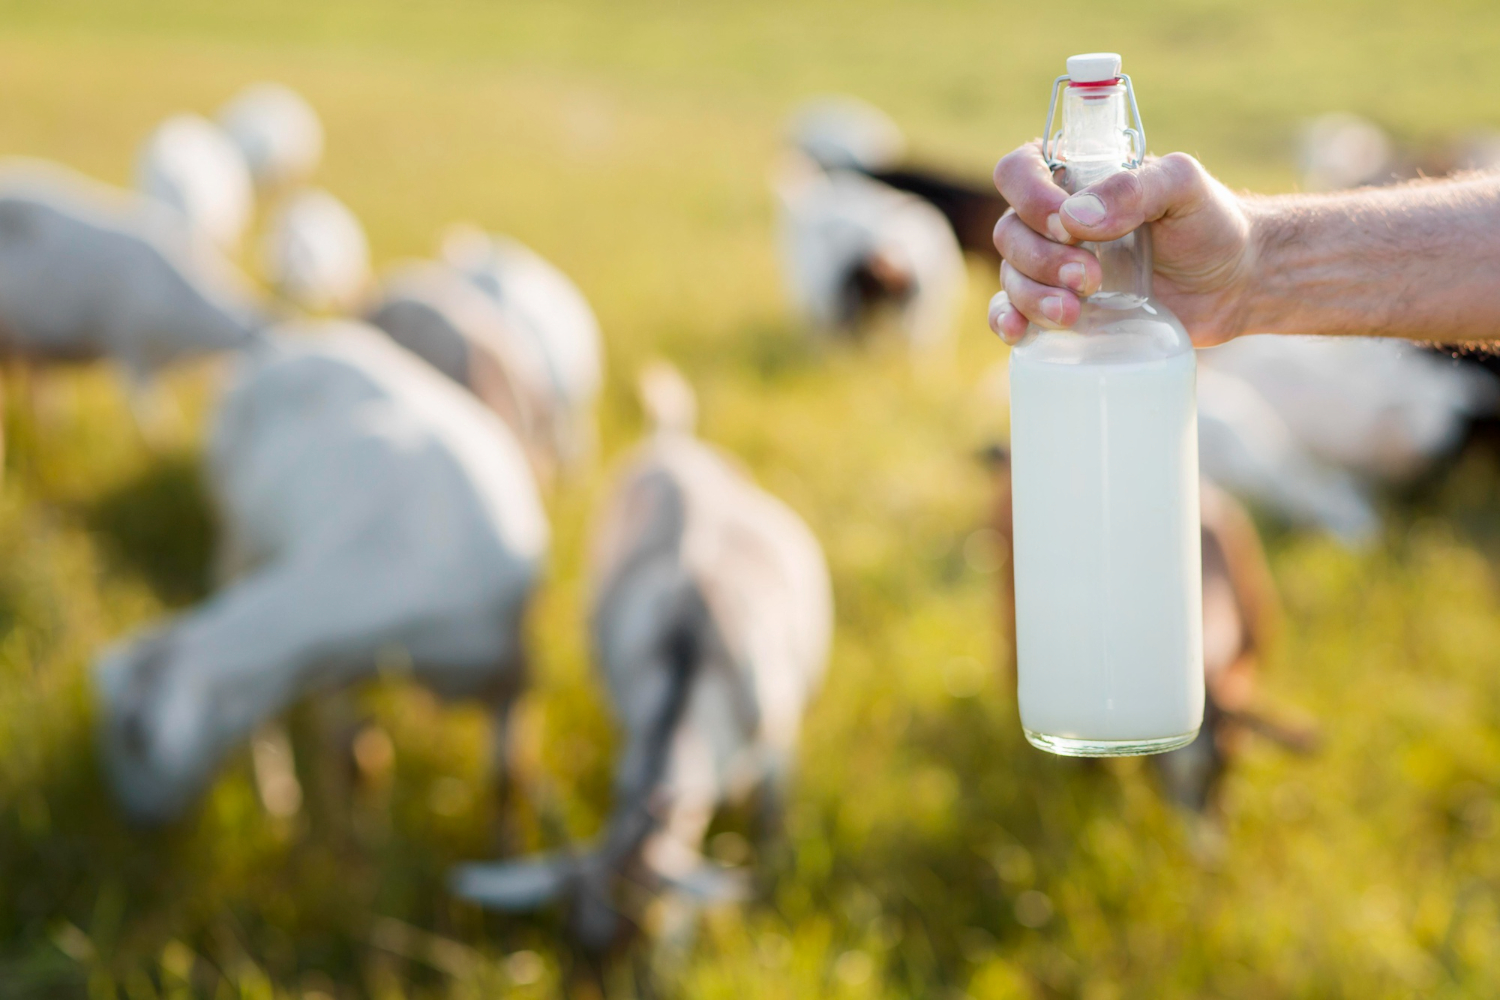 bacterias lácticas aisladas de leche cruda